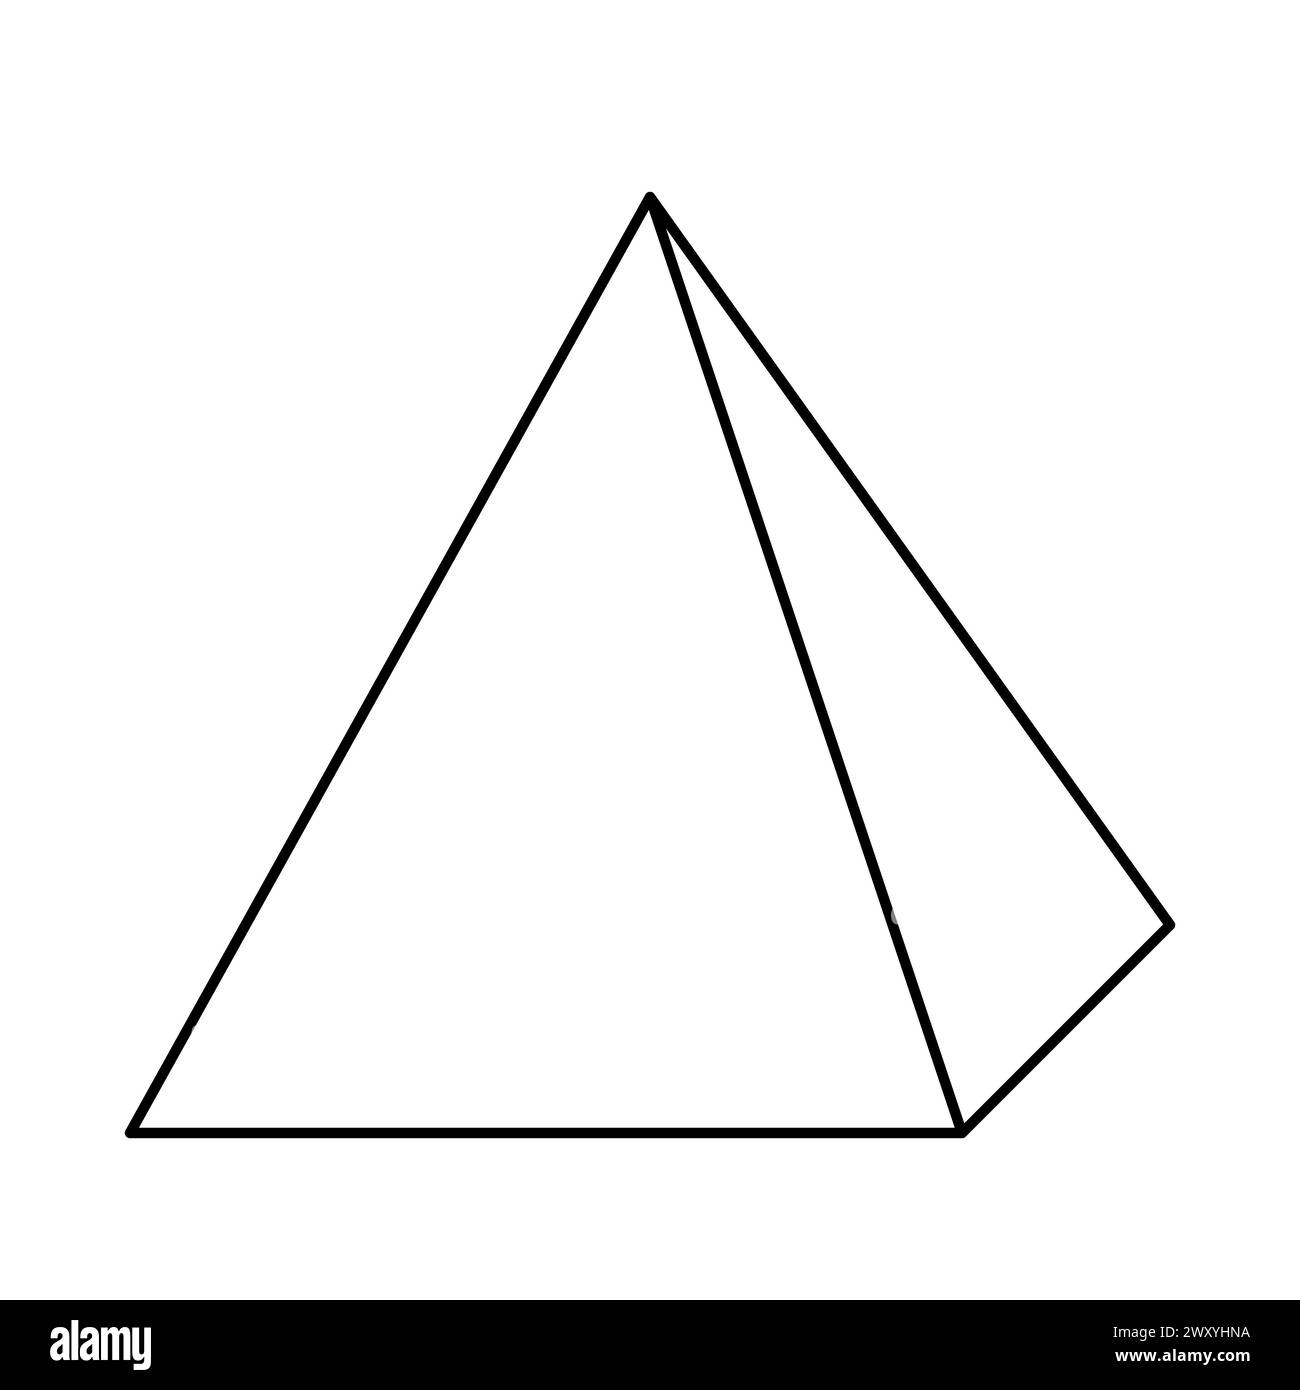 square pyramid shape, black and white vector illustration of regular polygonal base pyramid Stock Vector